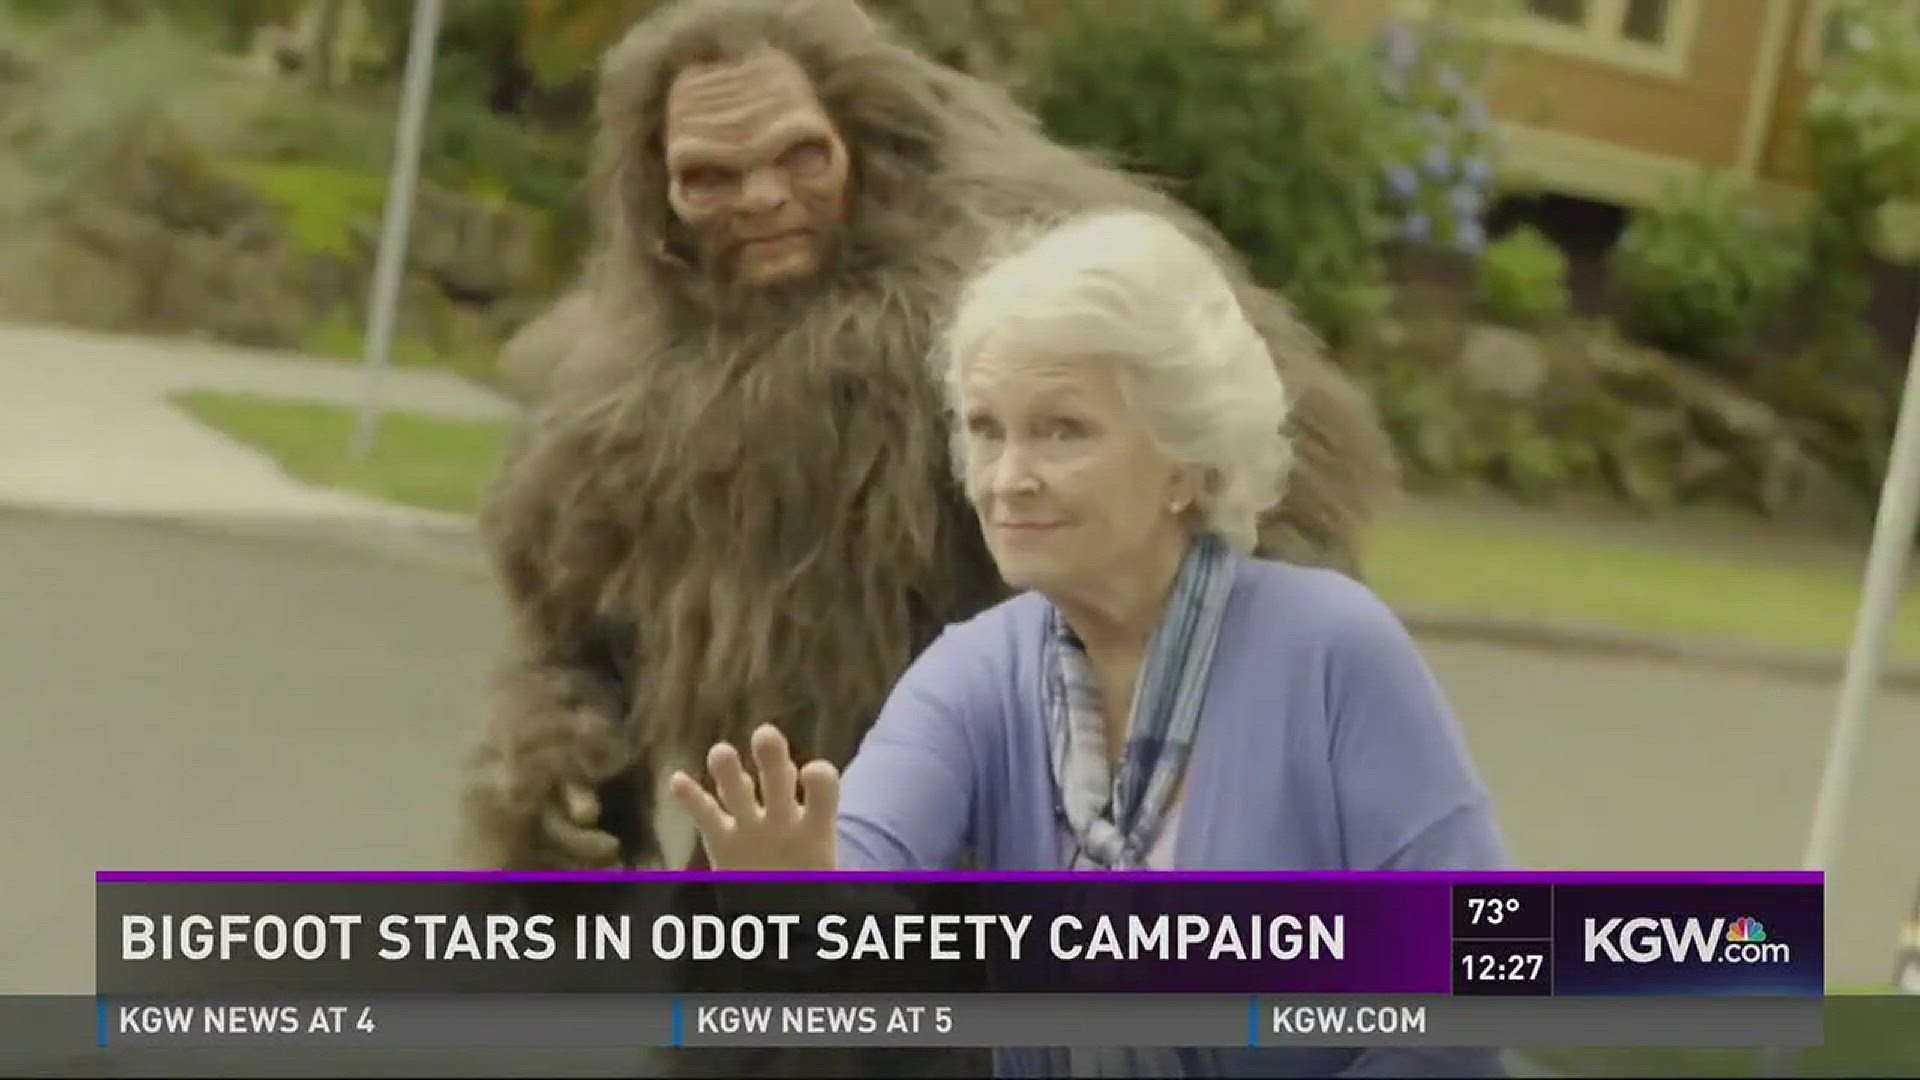 Bigfoot stars in crosswalk safety campaign